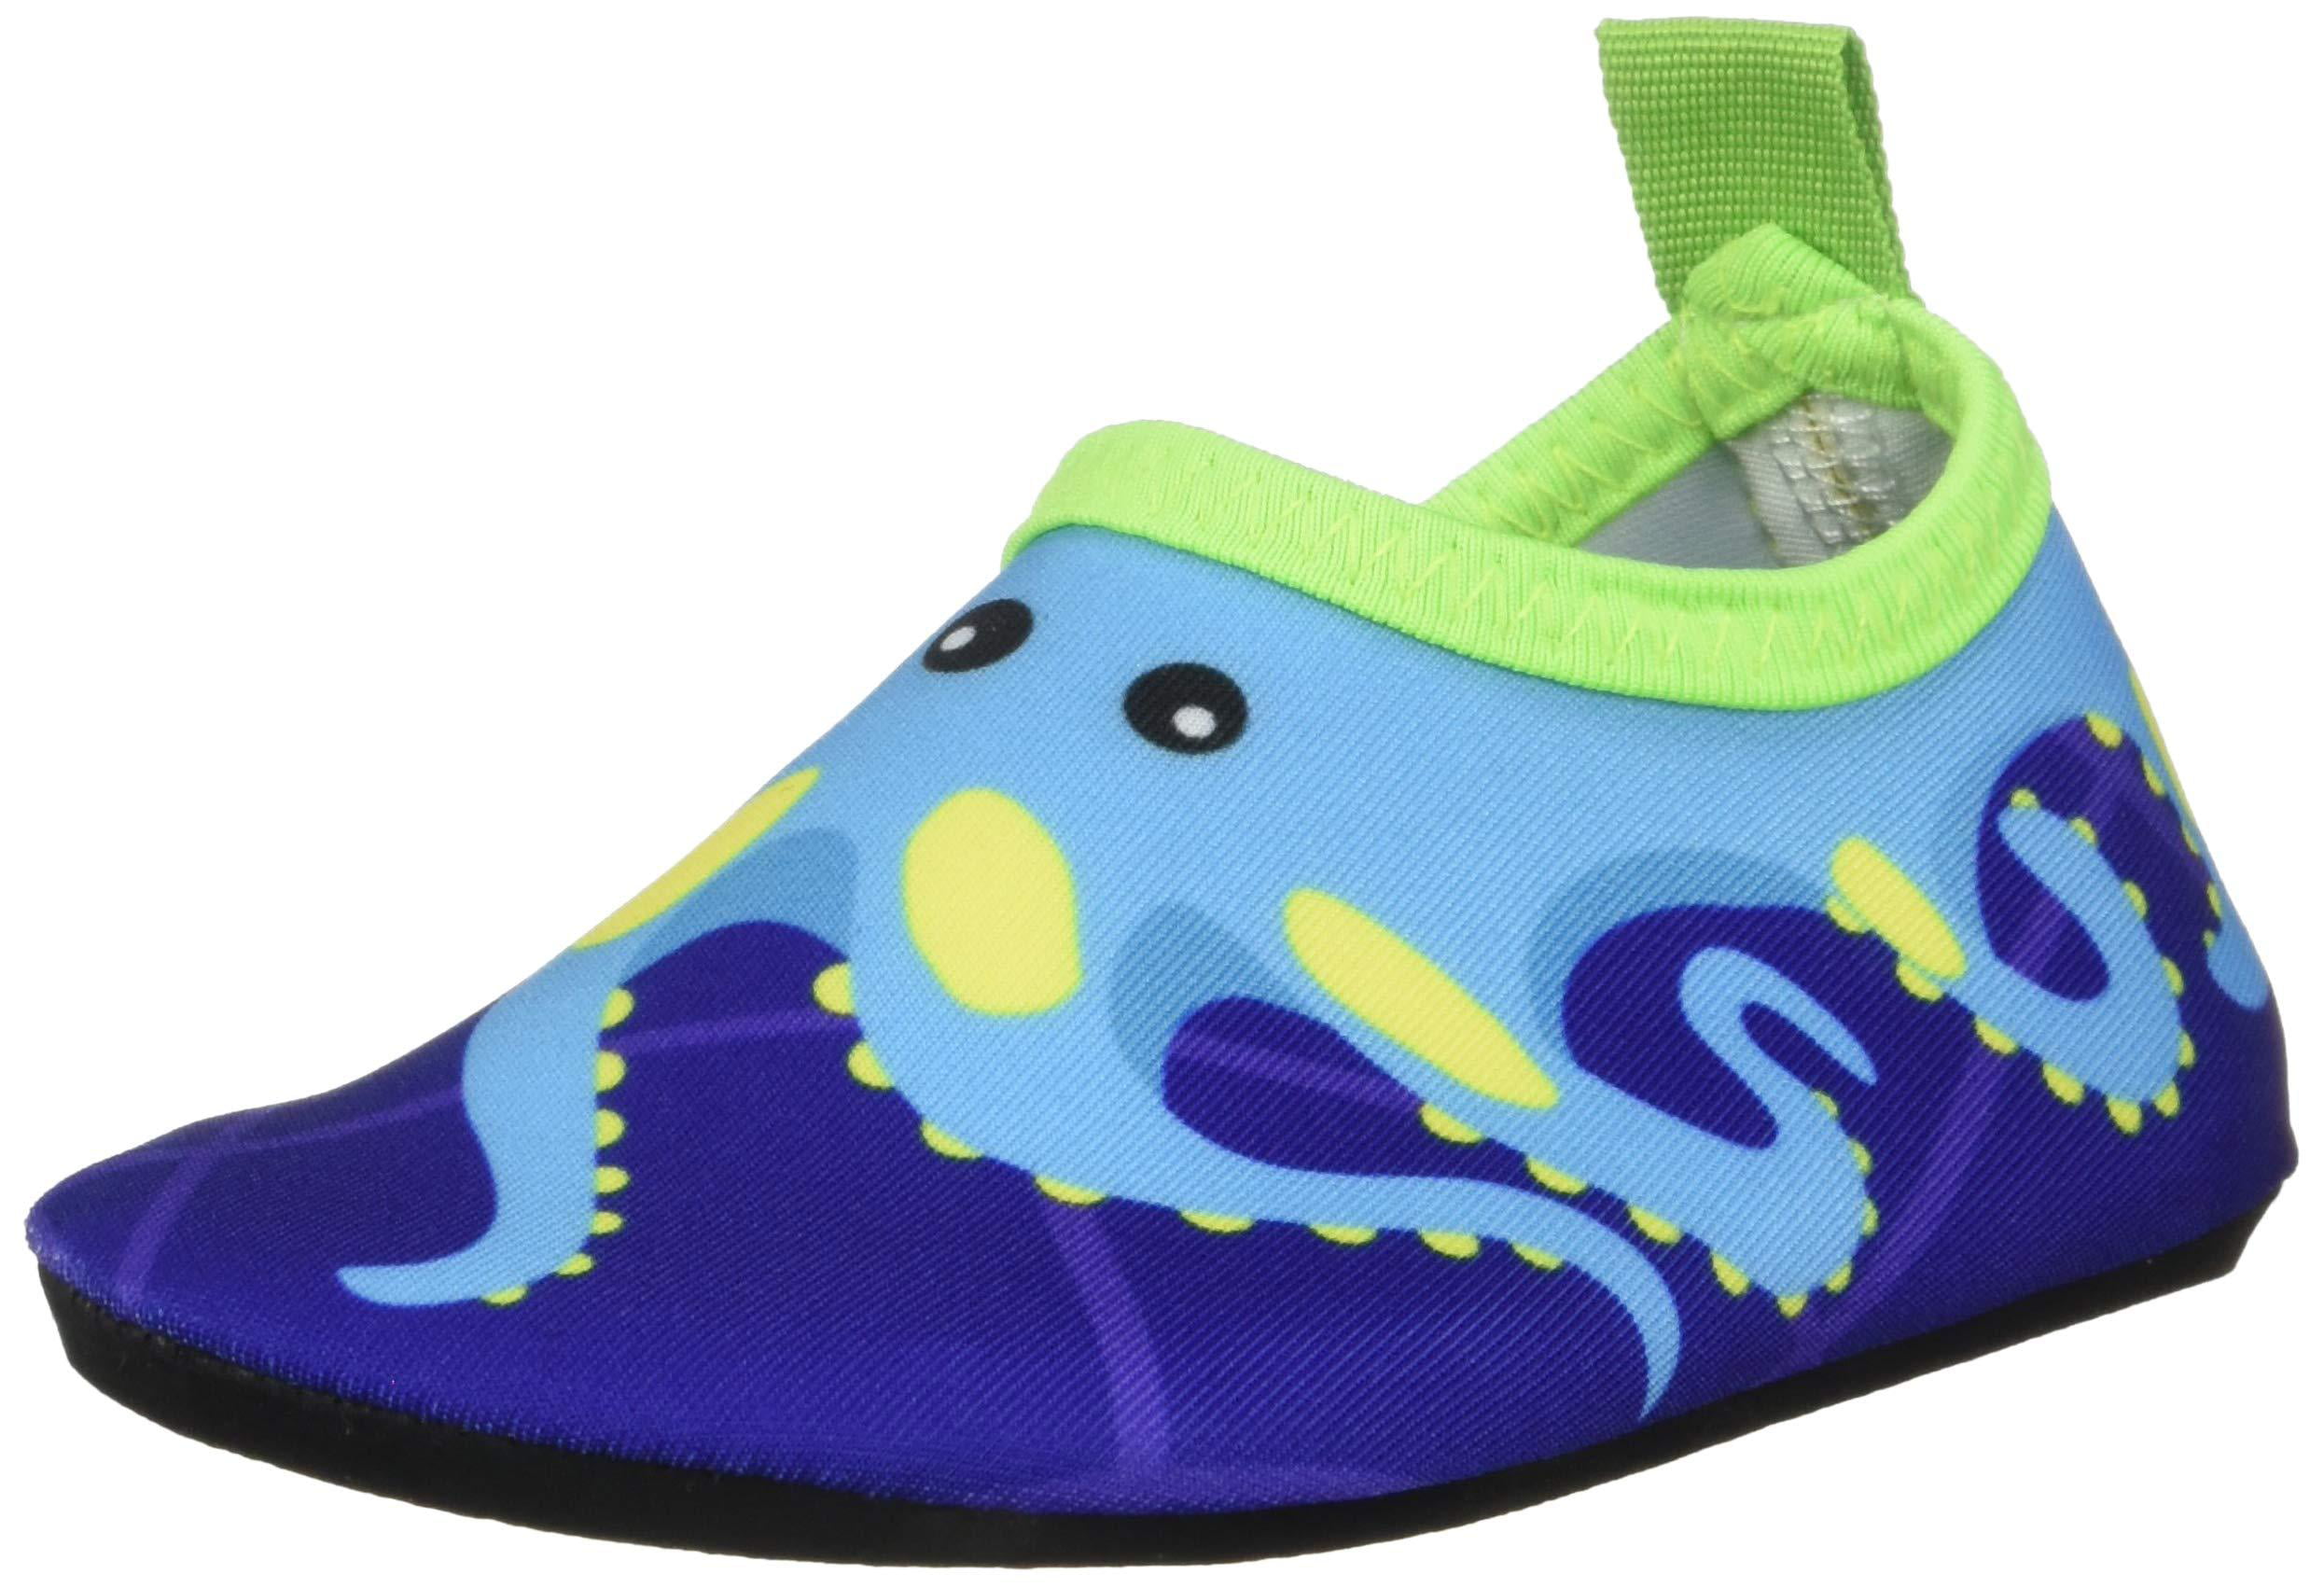 Bigib Toddler Kids Swim Water Shoes Quick Dry Non-Slip Water Skin Barefoot Sports Shoes Aqua Socks for Boys Girls Toddler